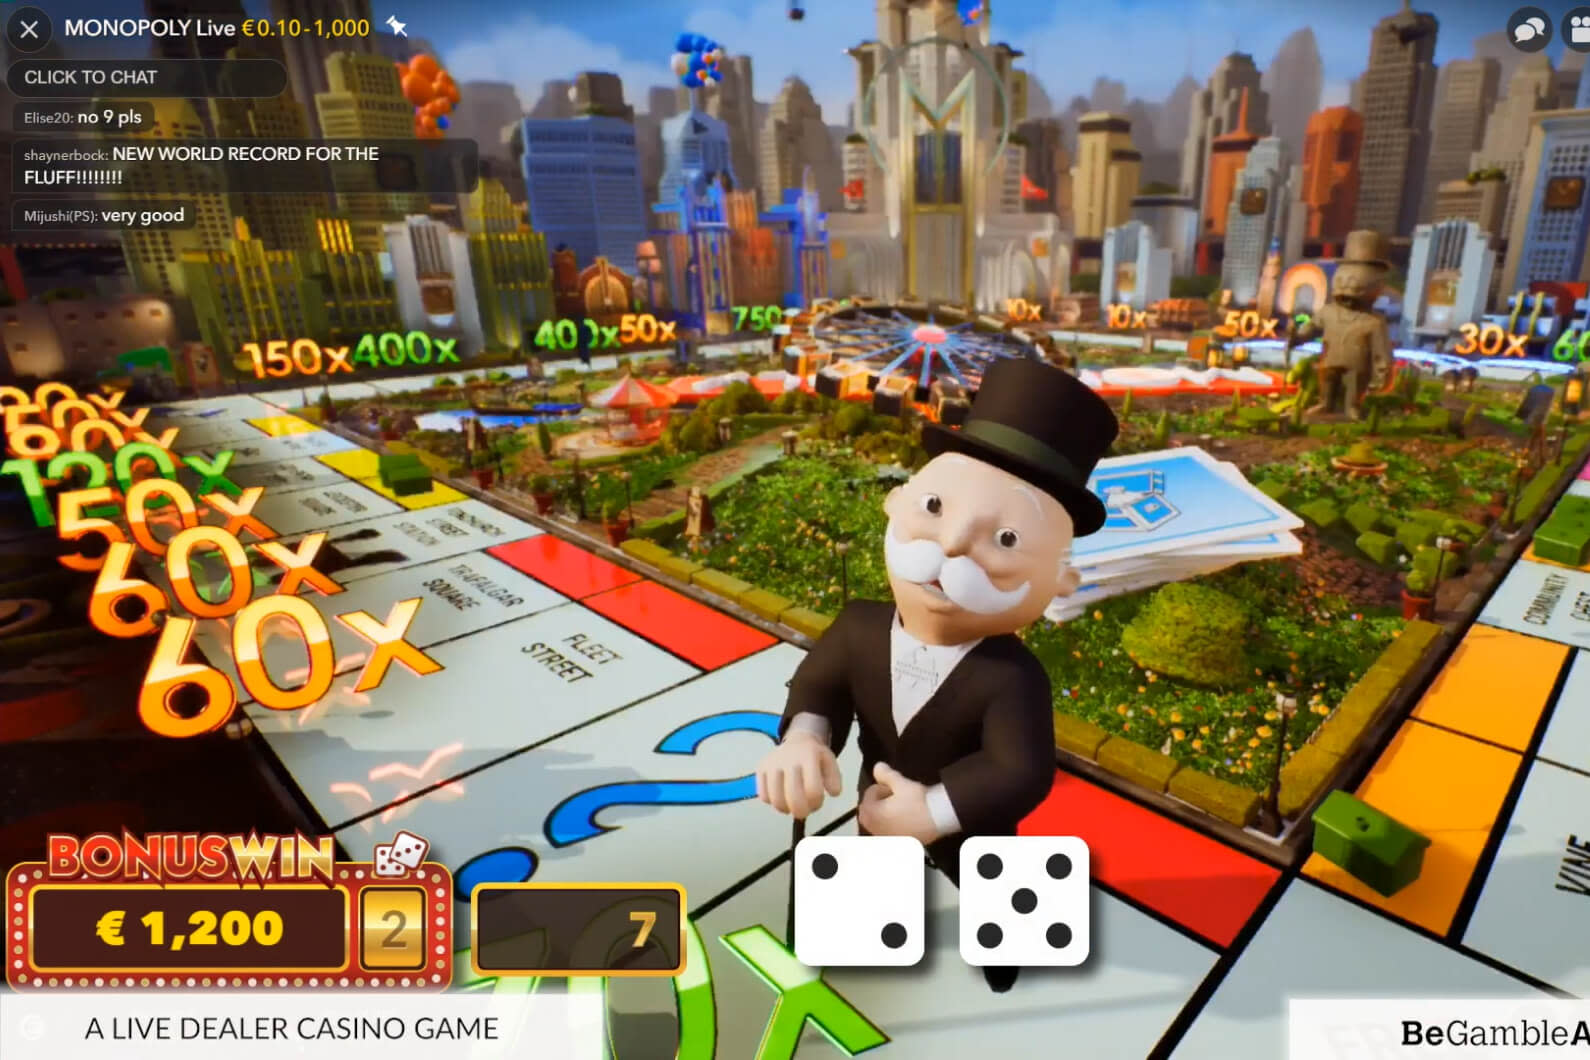 Monopoly live - Bonus round screenshot